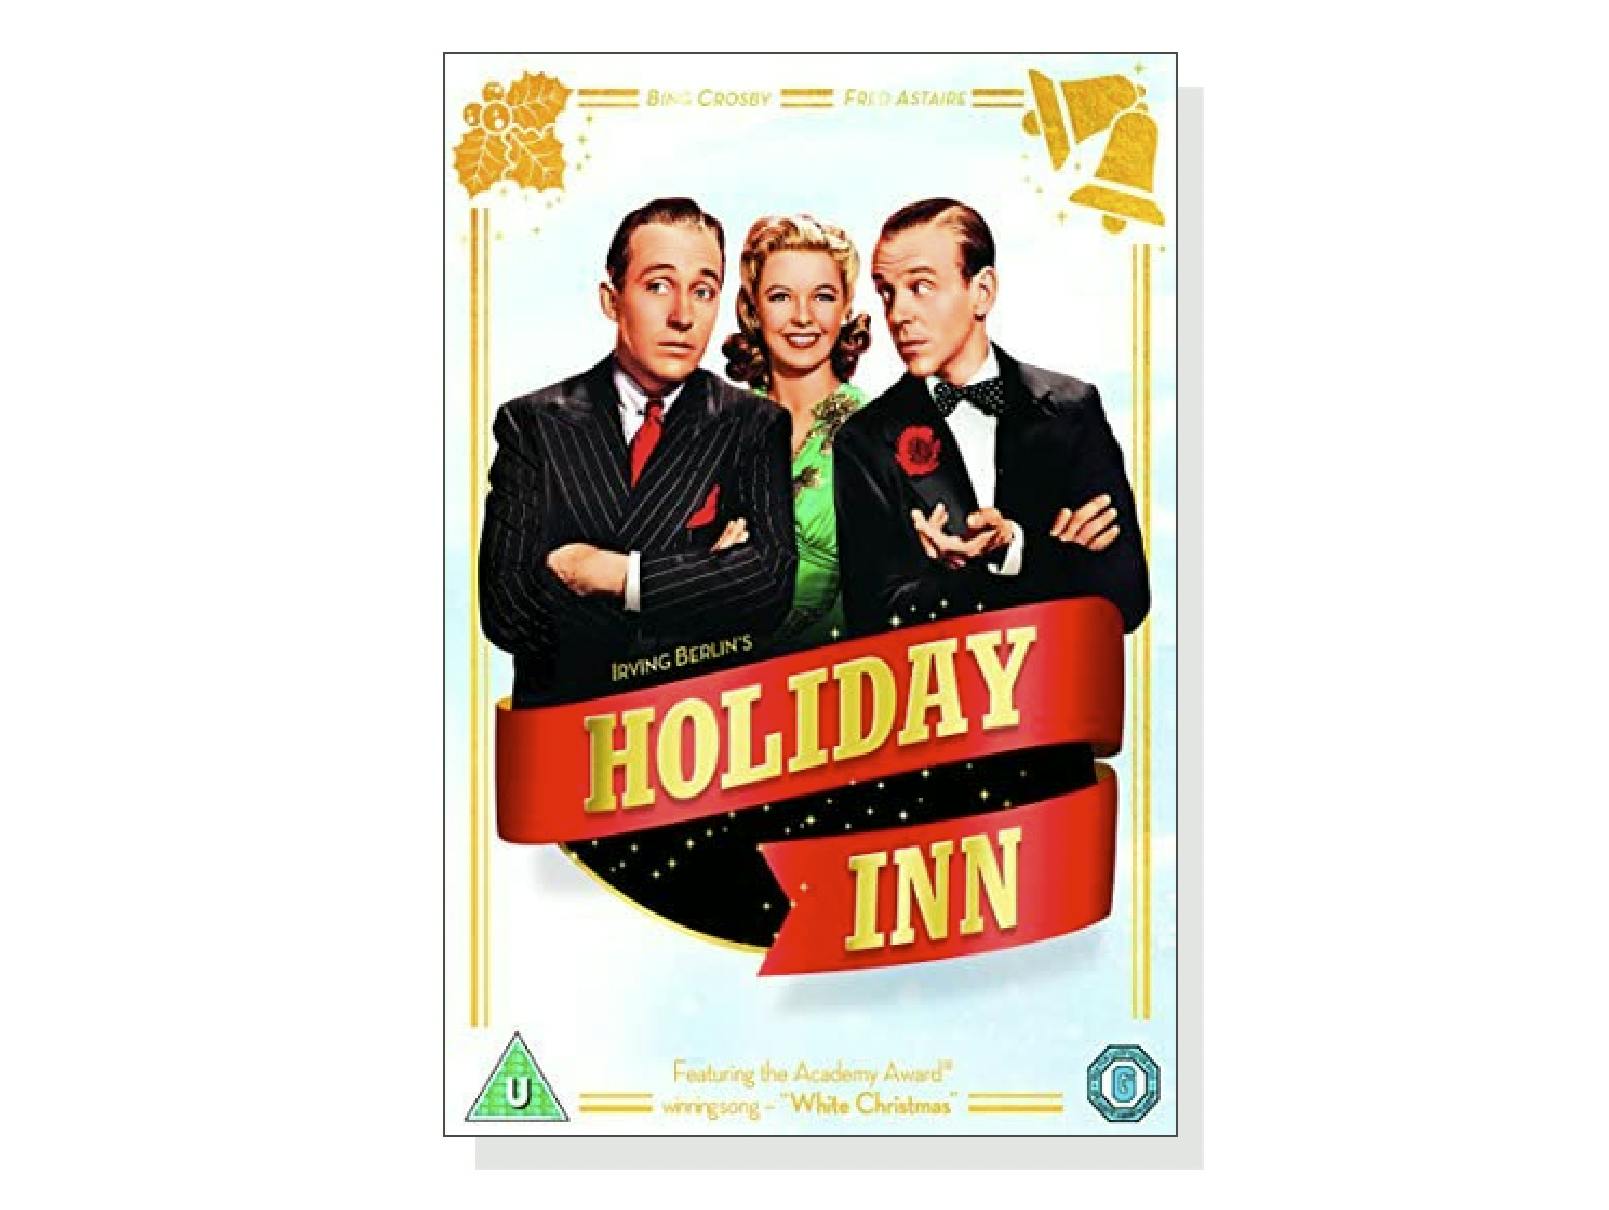 Thanksgiving movie Holiday Inn